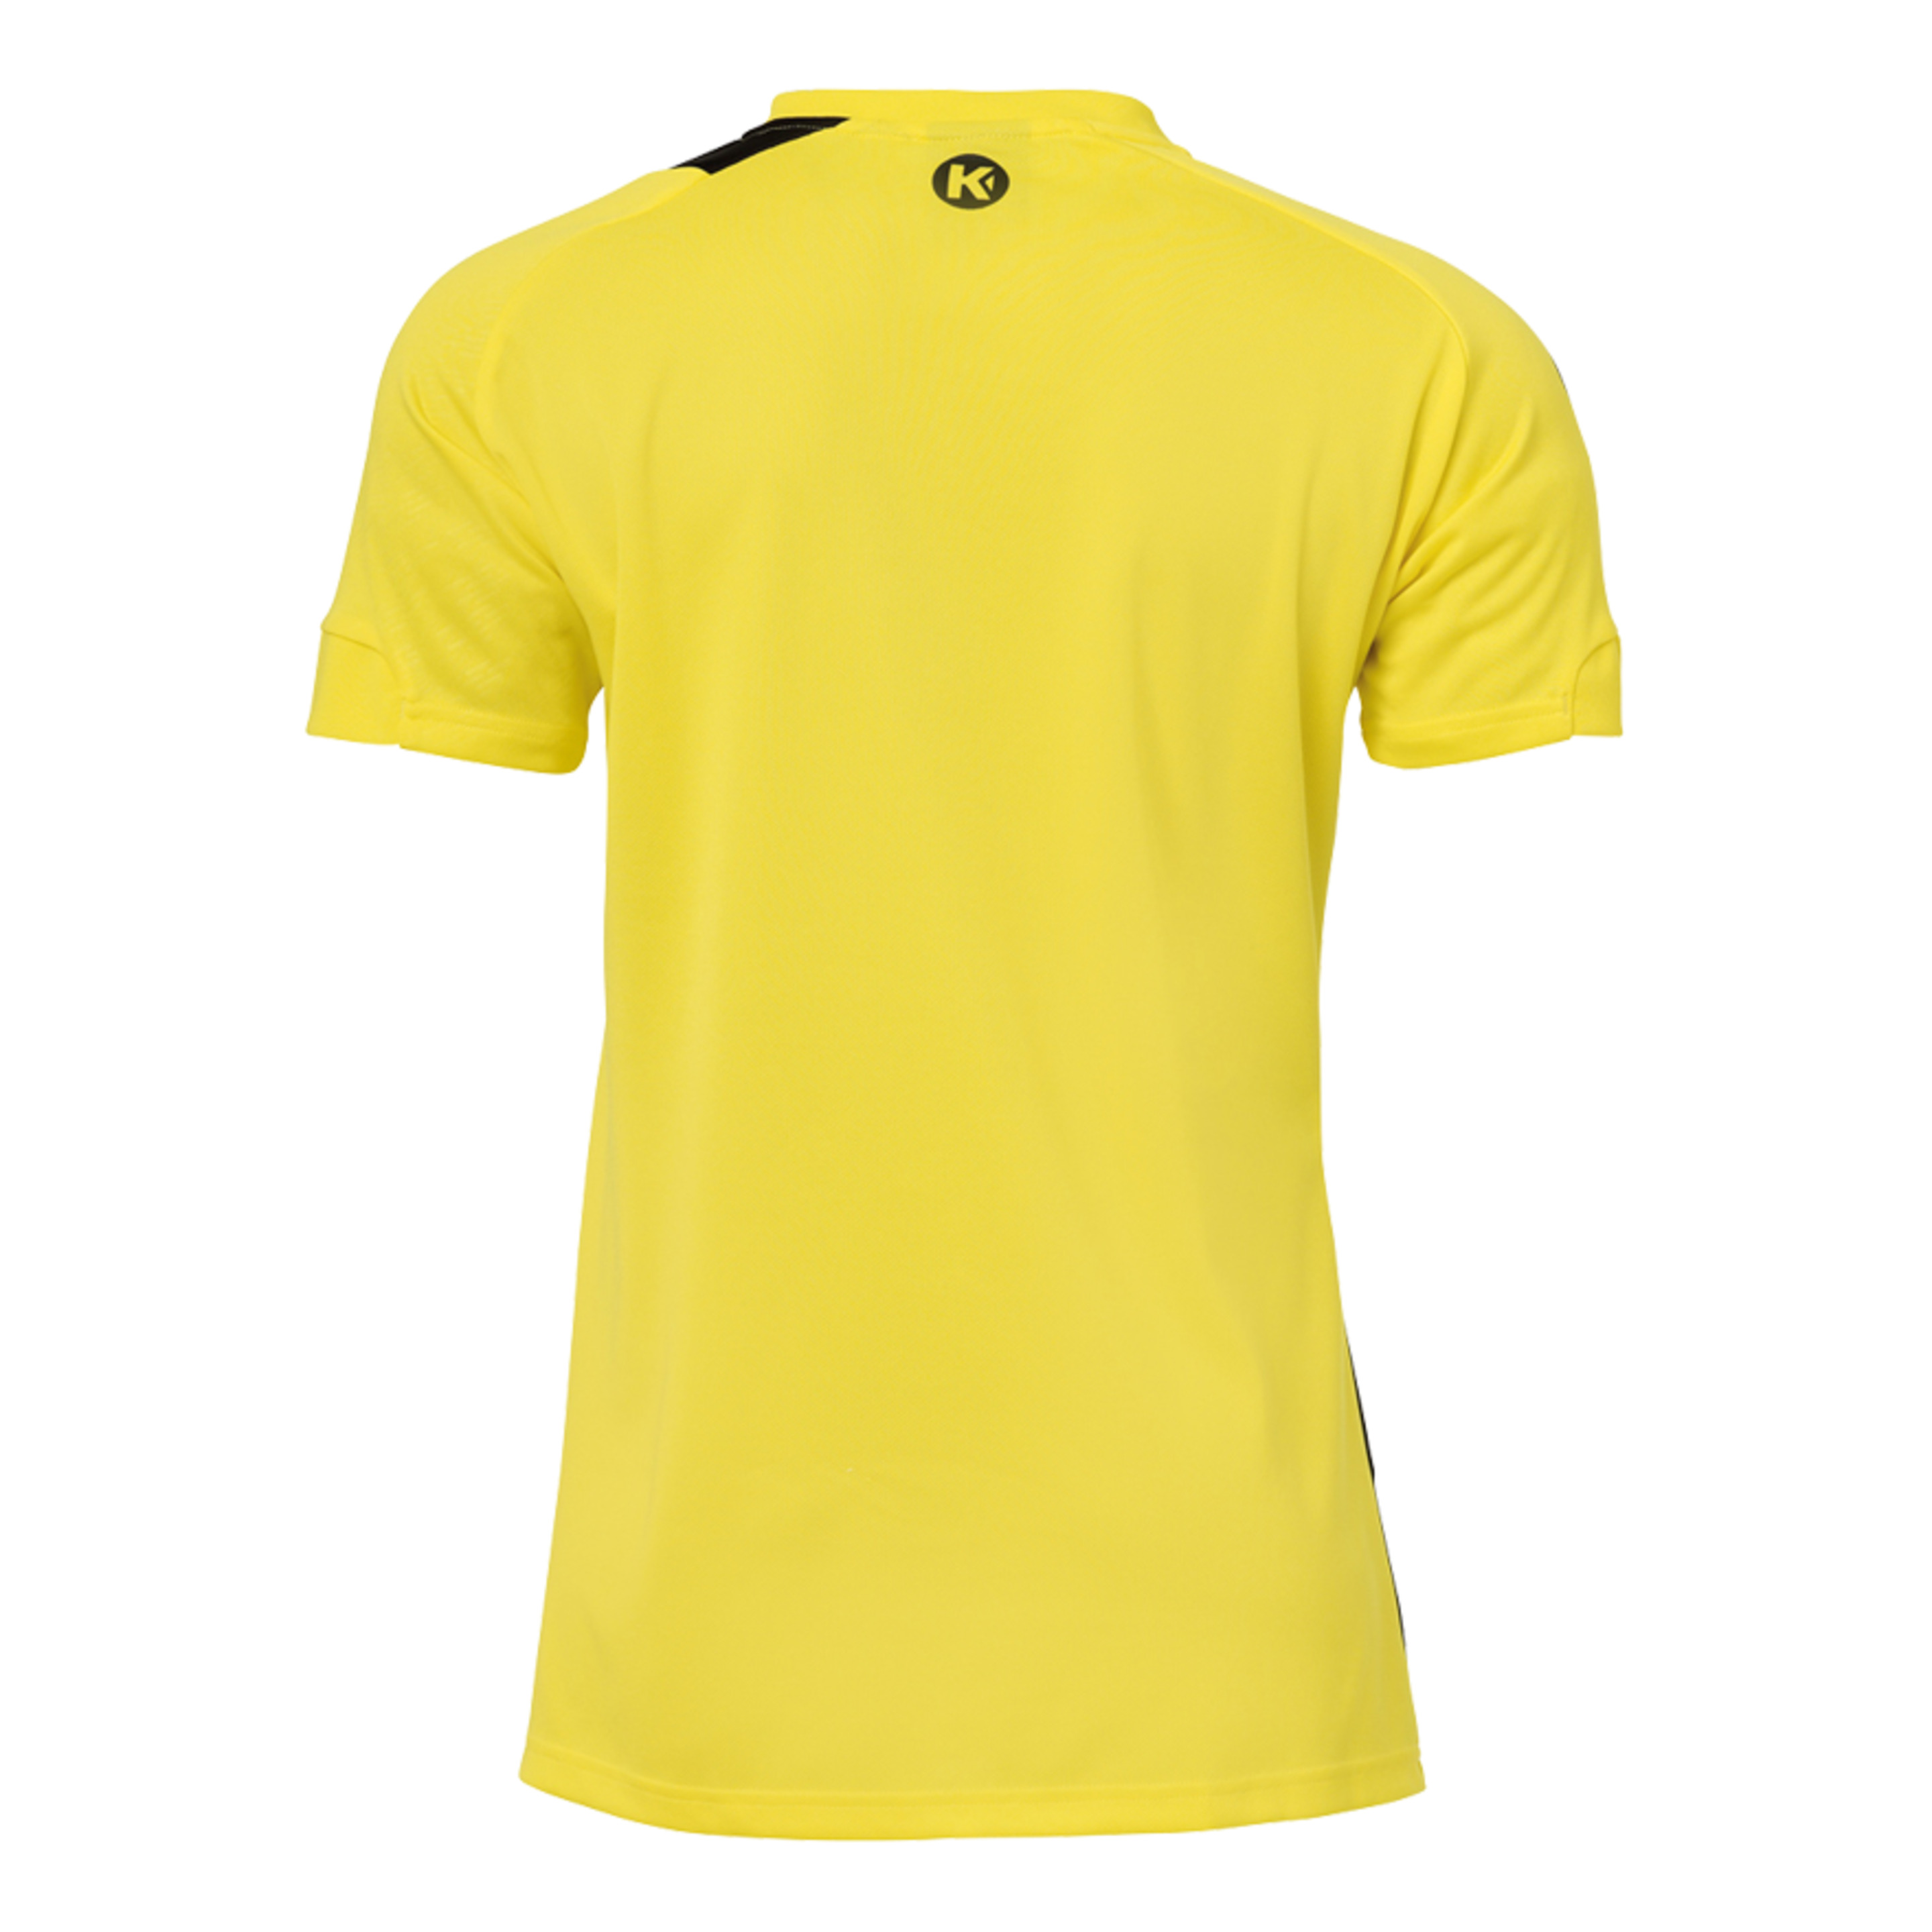 Peak Camiseta De Mujer Lima Amarillo/negro Kempa